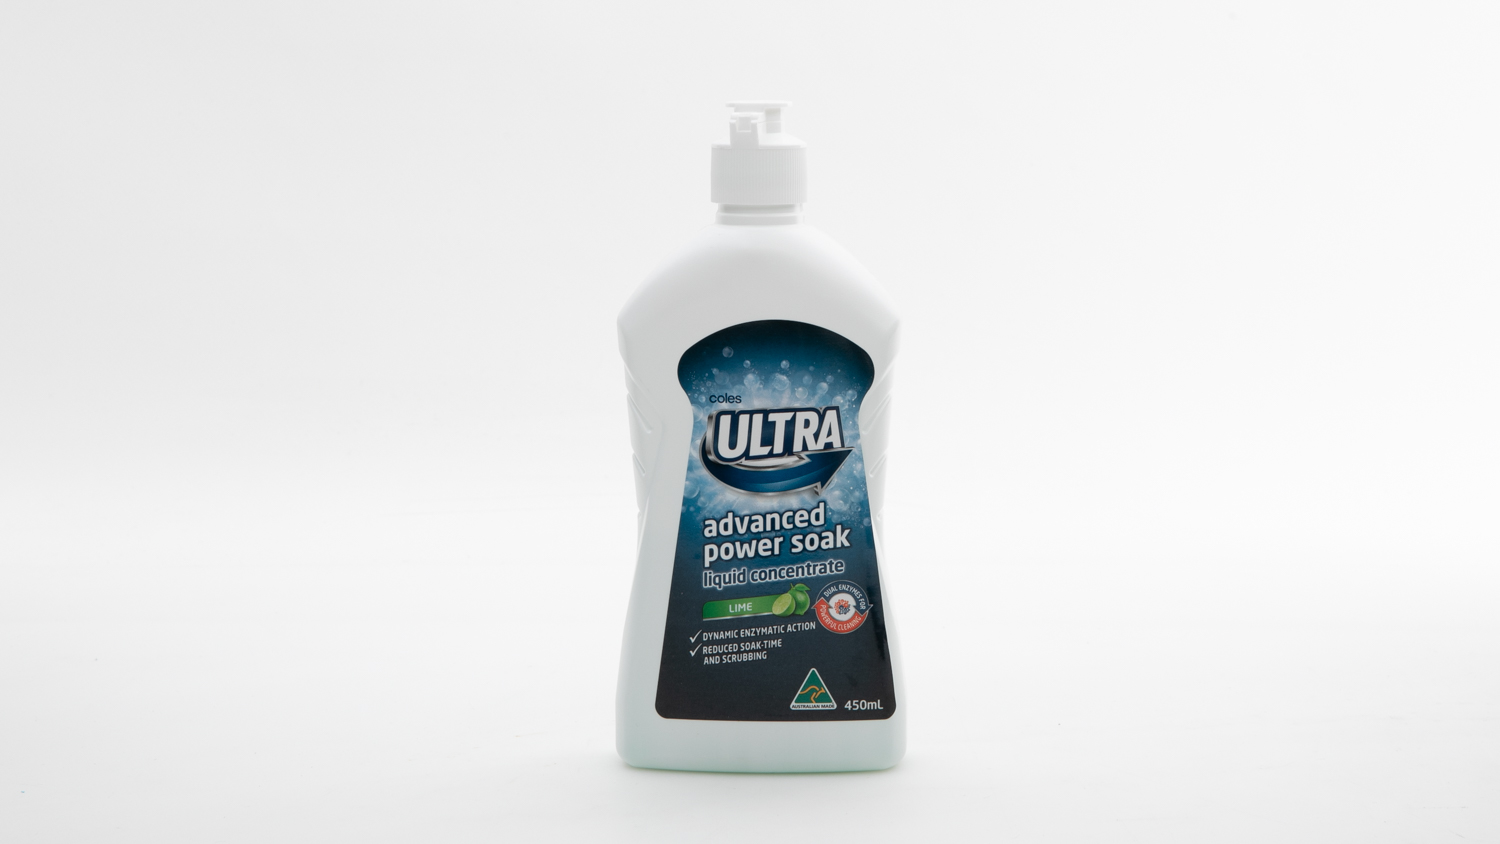 Coles Ultra Advanced Power Soak Liquid Concentrate carousel image